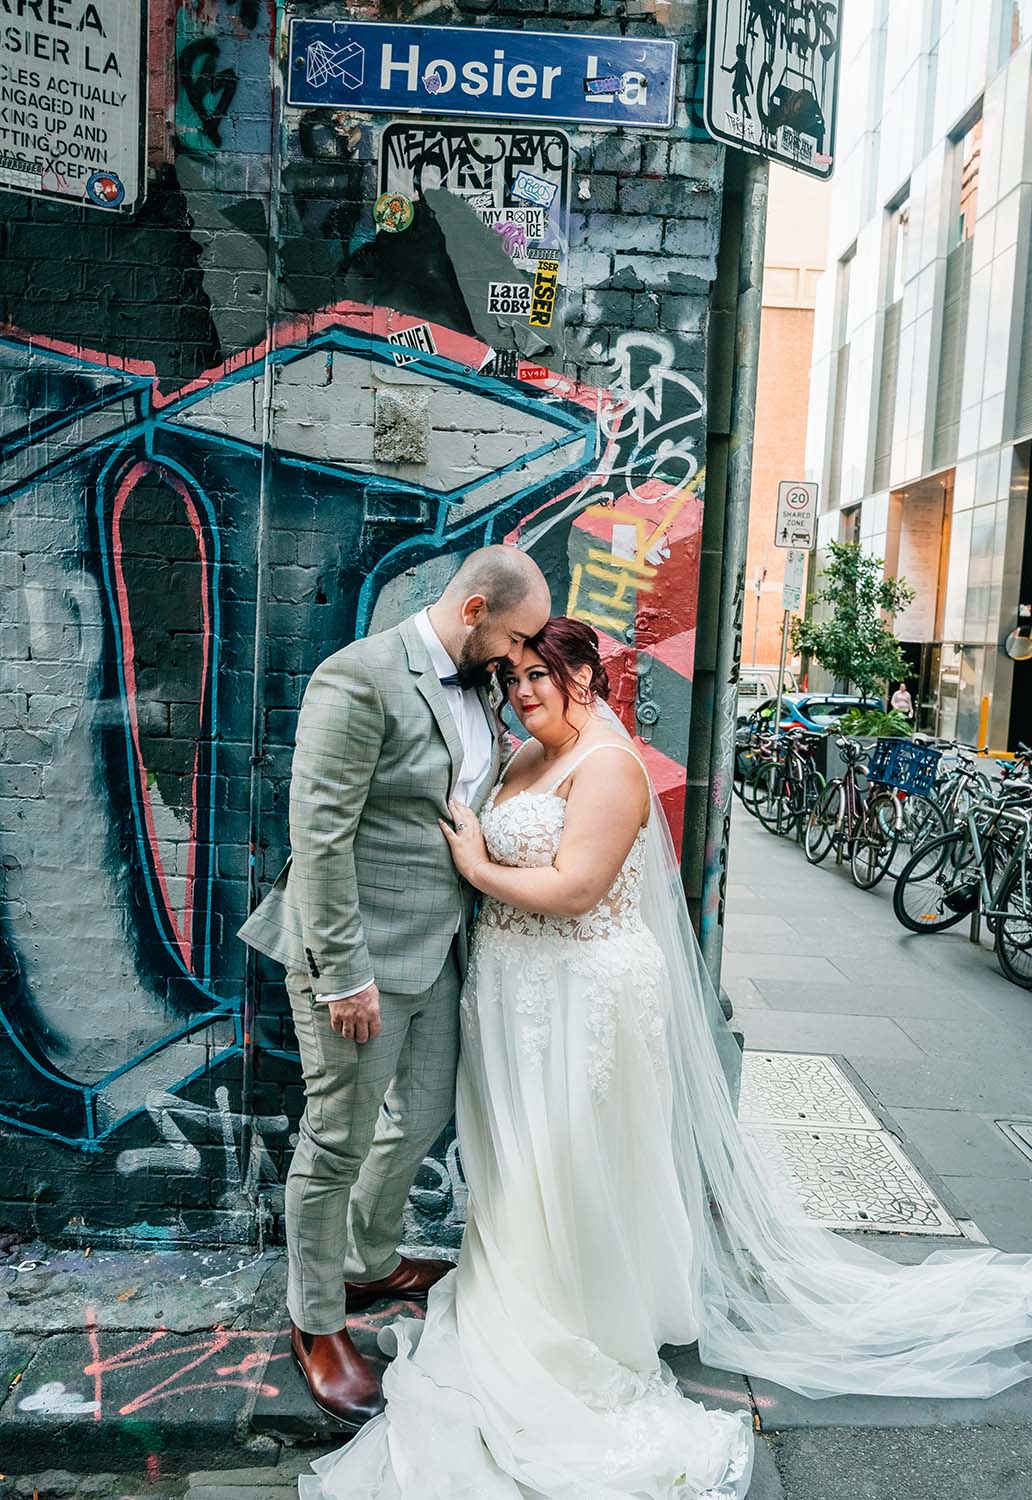 Destination Wedding Photography - Bride and Groom on Melbourne Street